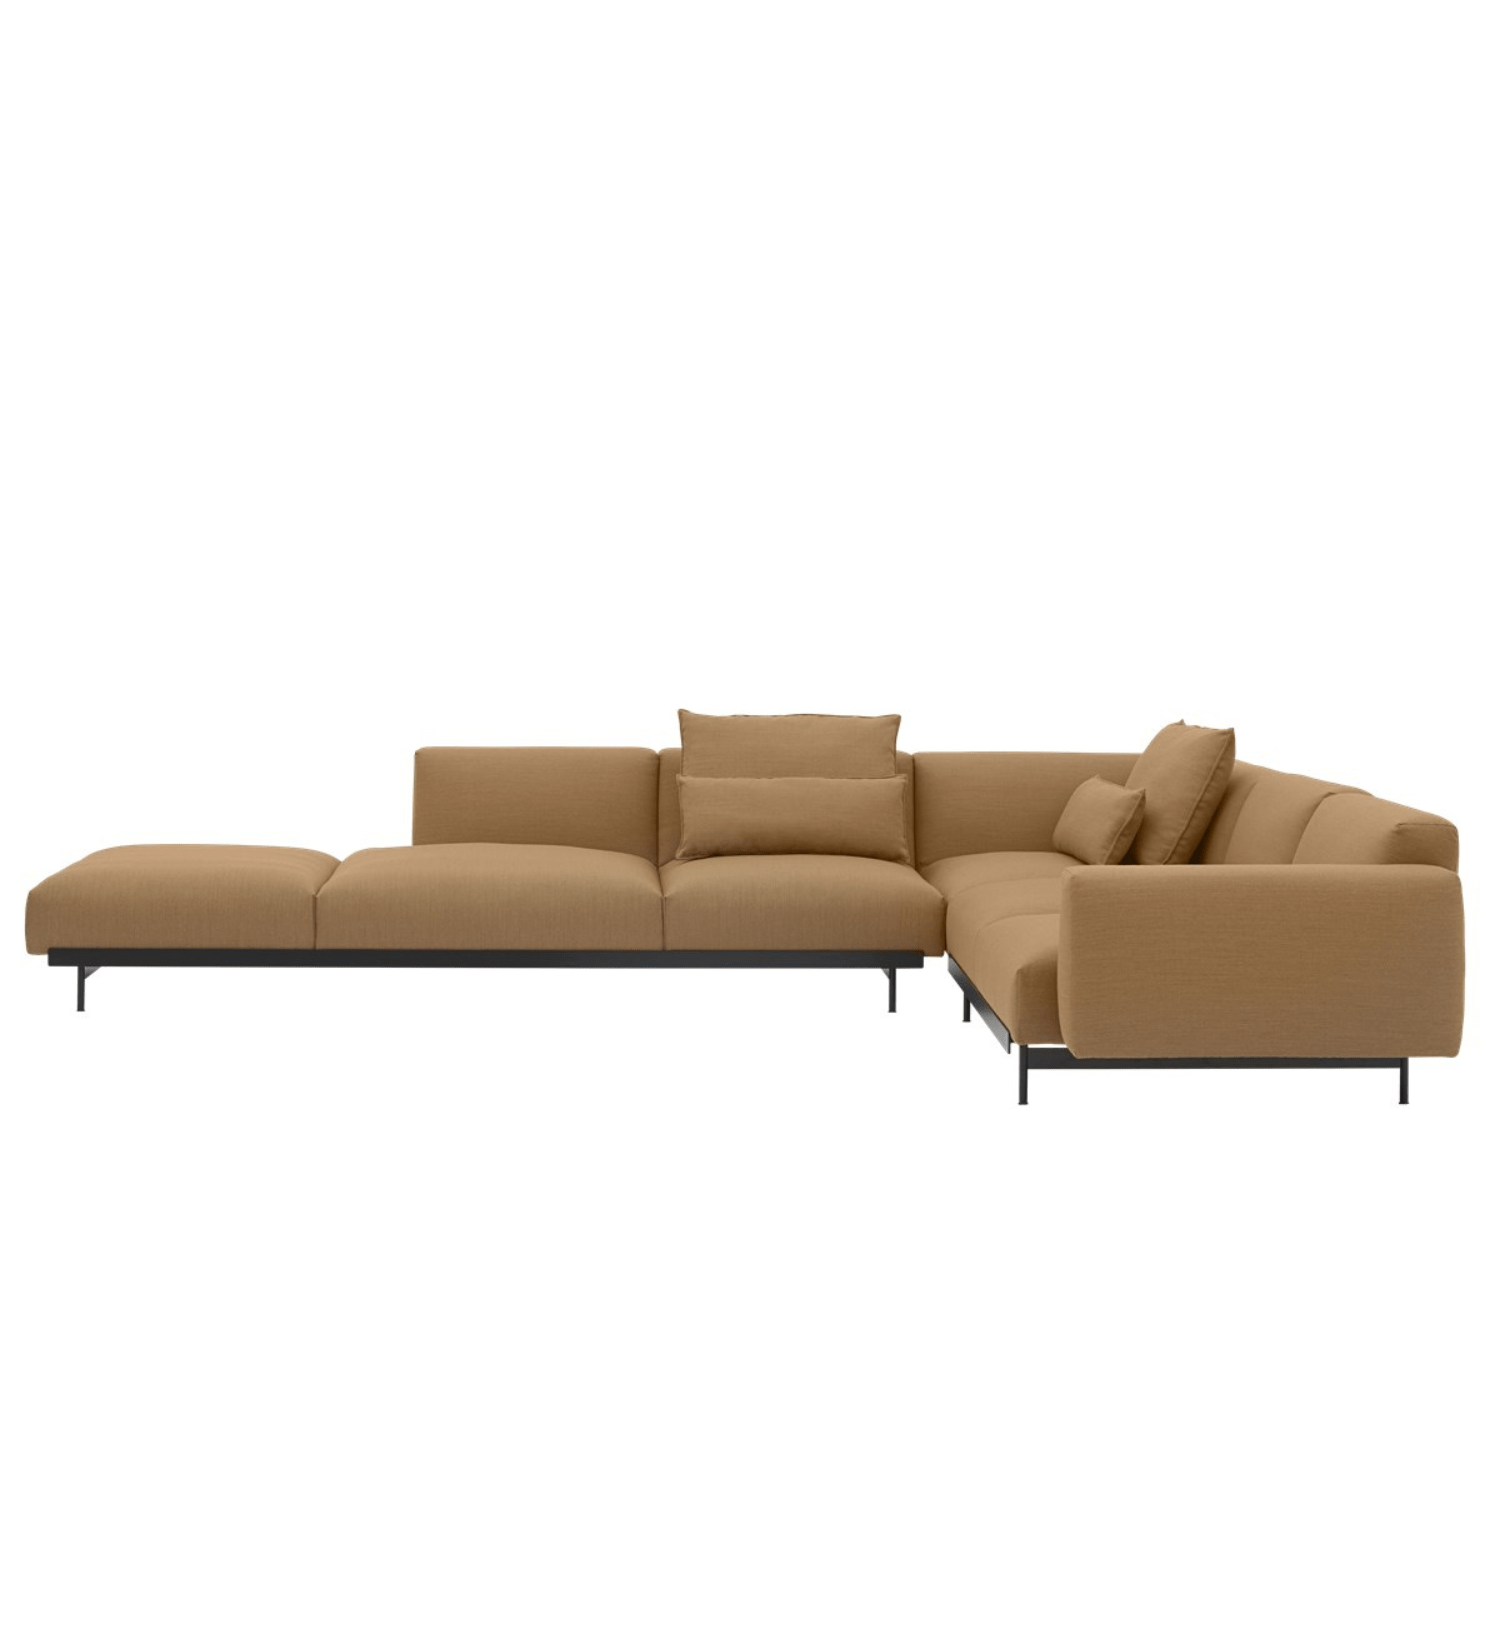 InSitu Modular Sofa marki Muuto